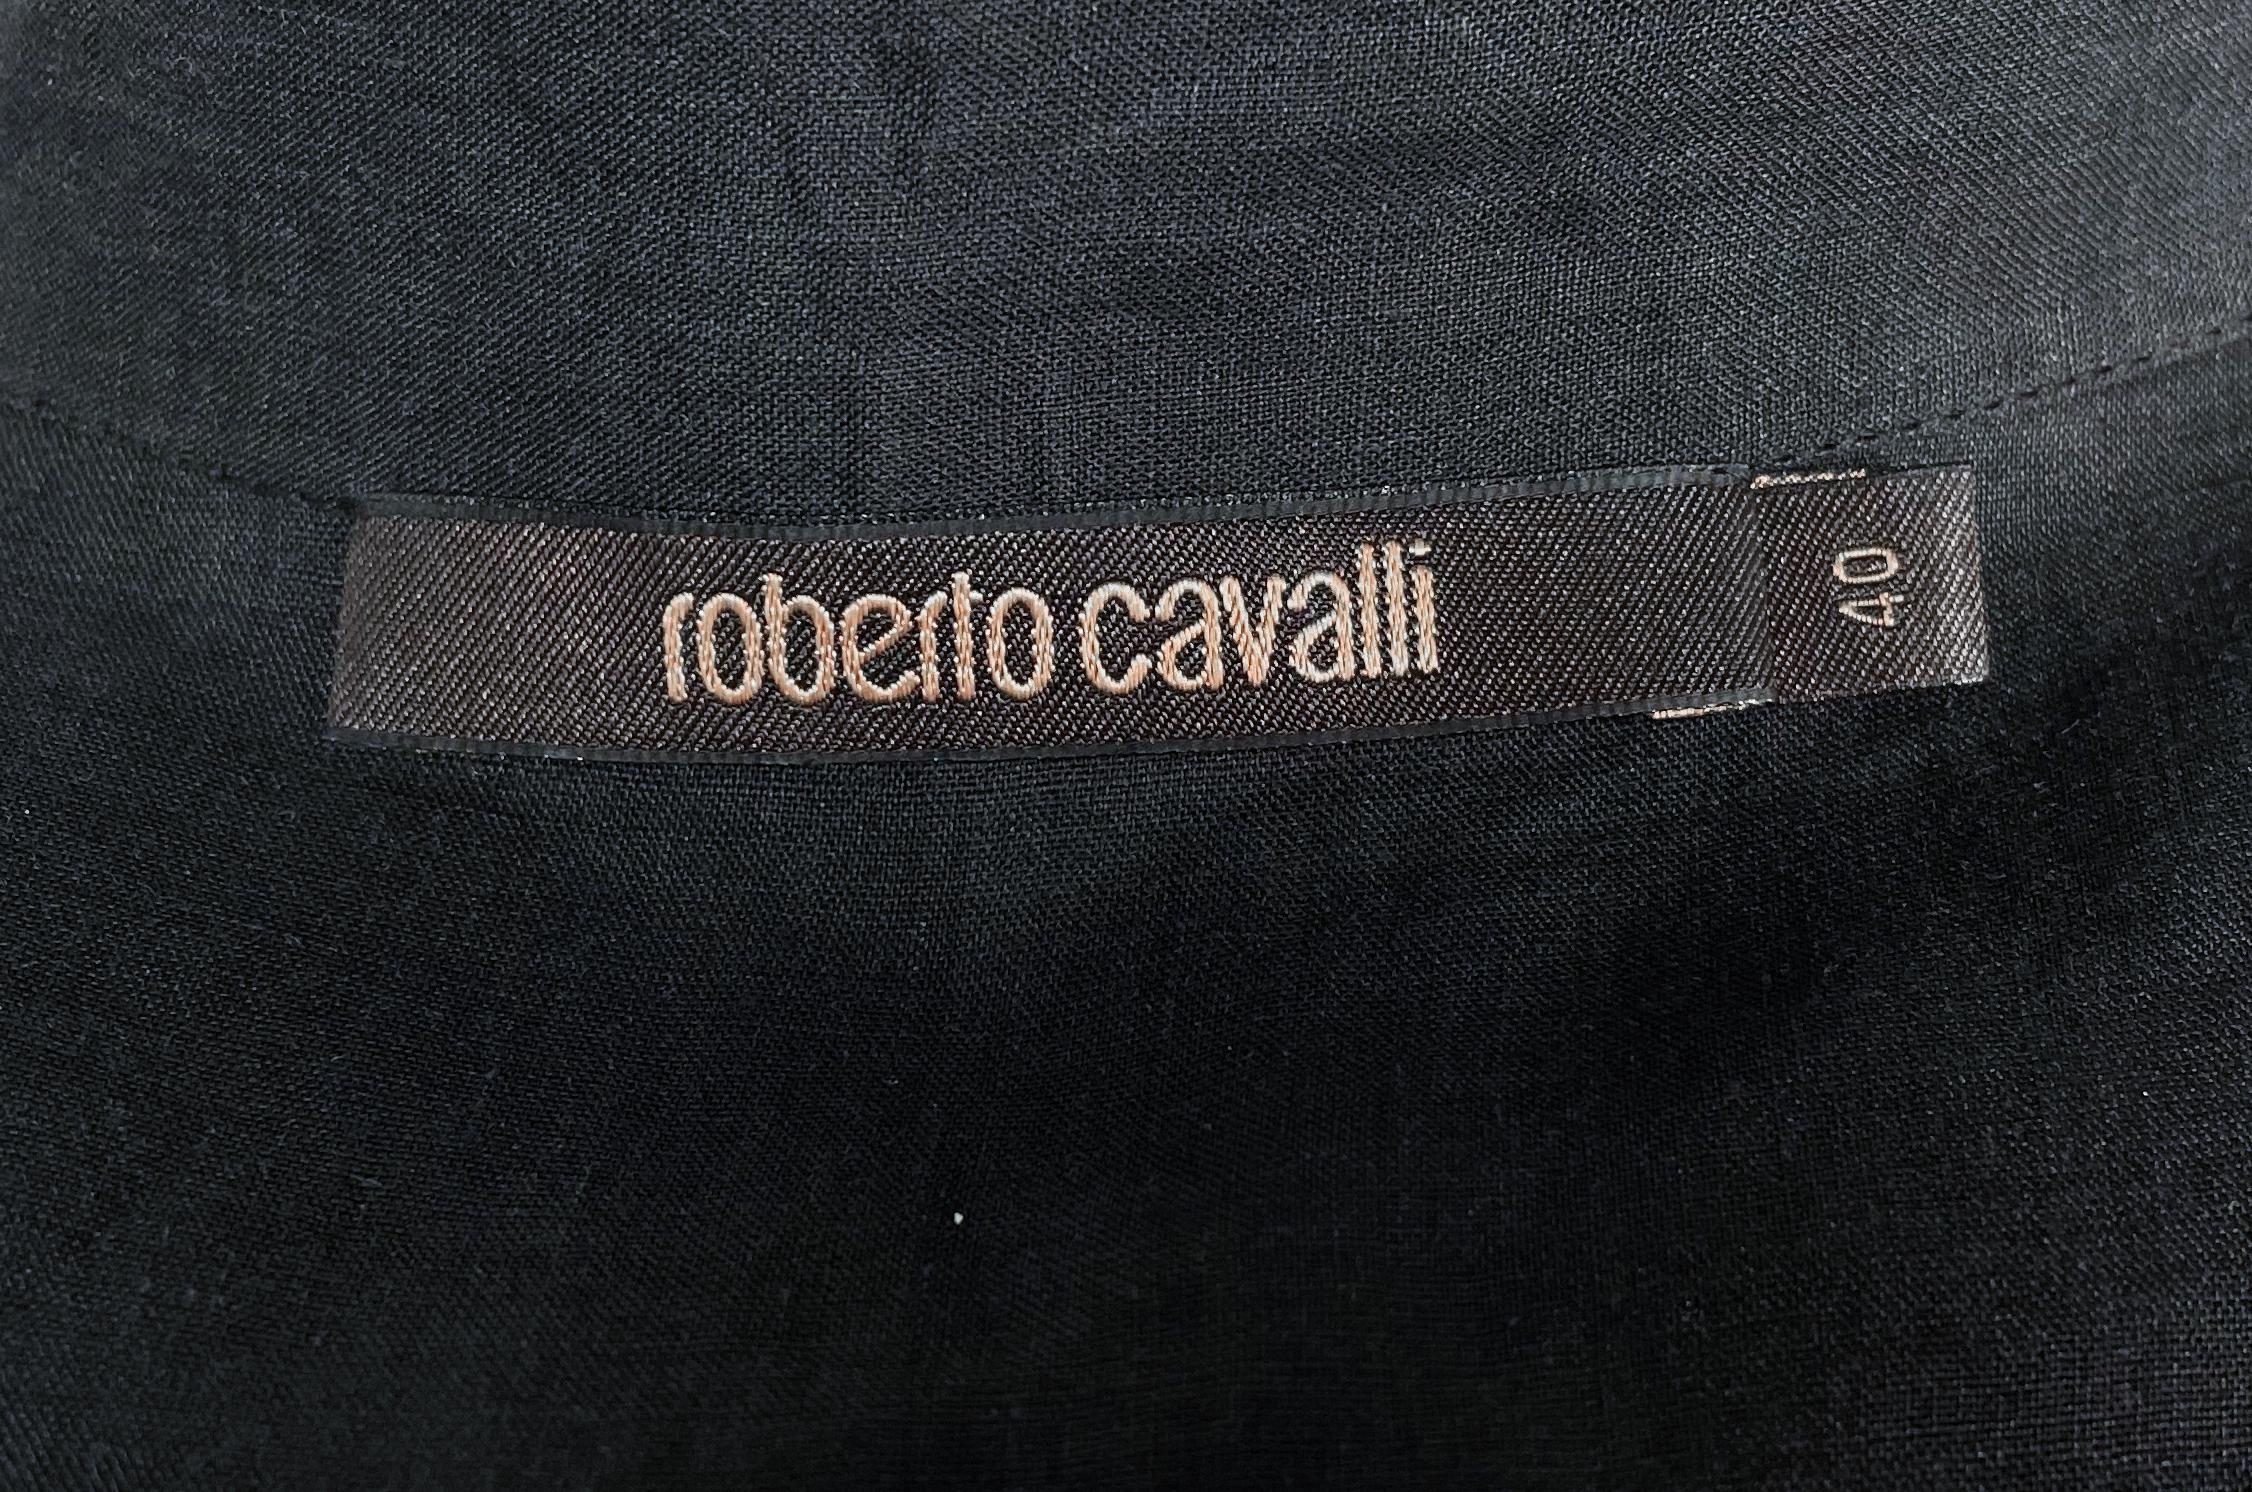 Roberto Cavalli sheer black floral appliqué blouse, 2000s For Sale 2